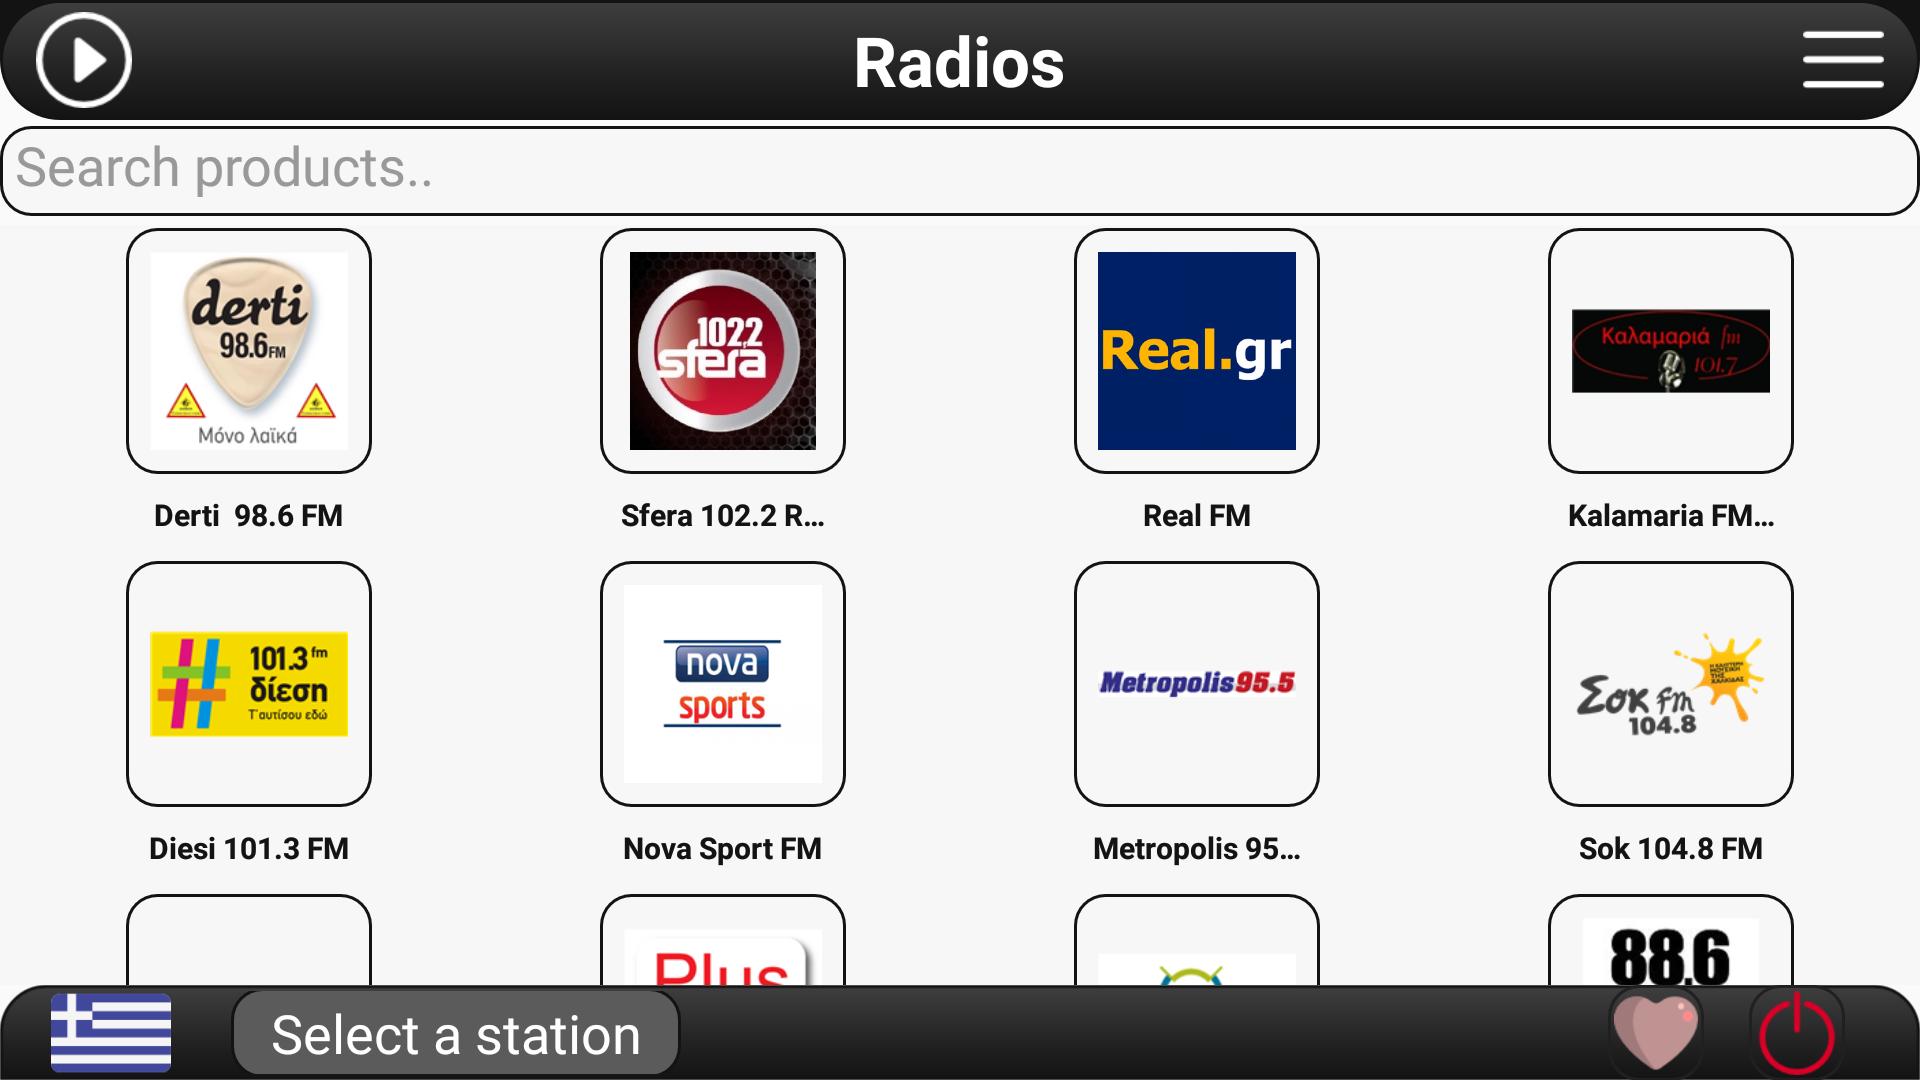 Сфера радио Греция. Радио Луки fm. Радио богатырь ФМ. Радио чат. Топ чат радио